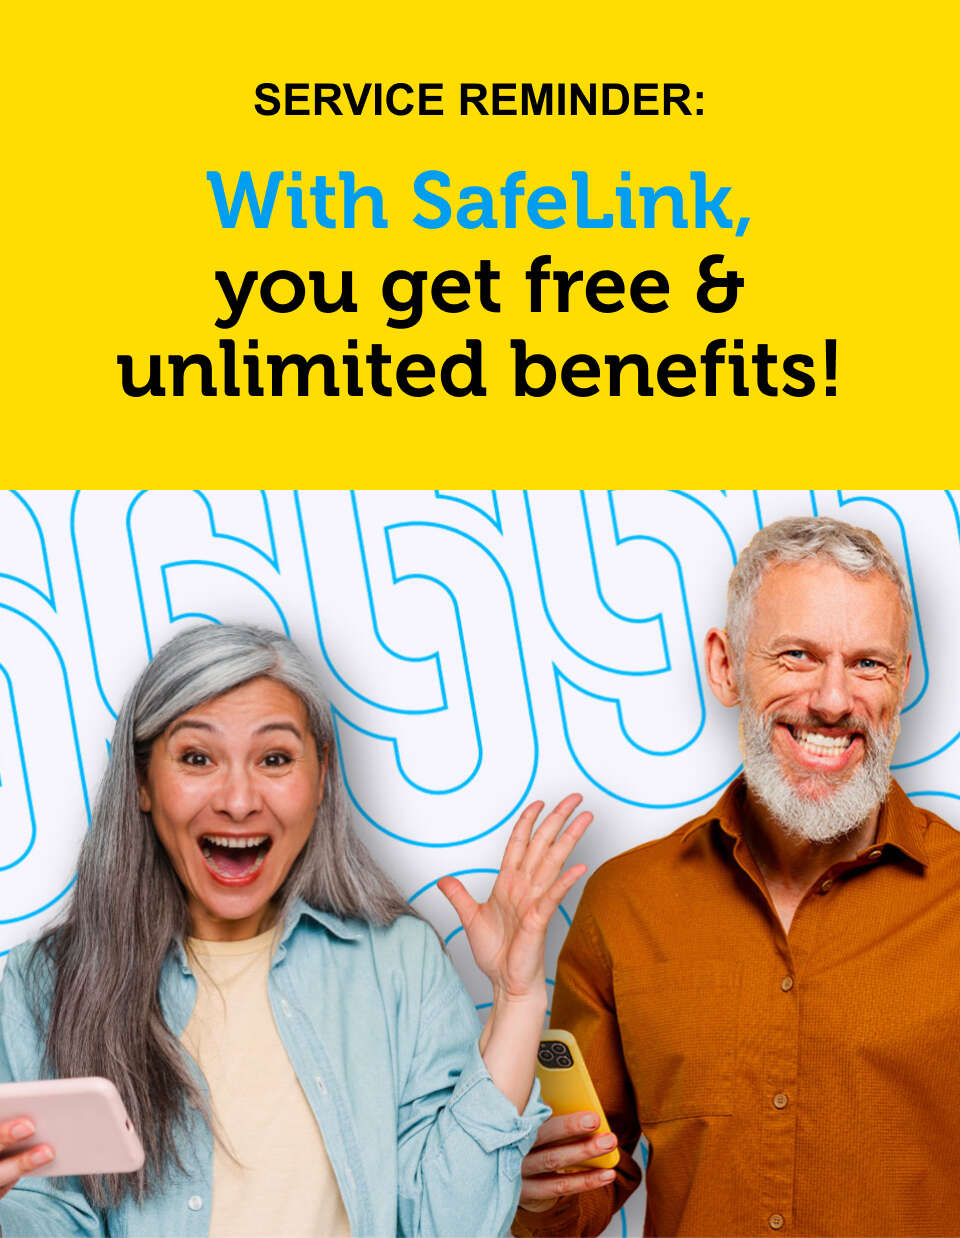 SERVICE REMINDER: With SafeLink, you get free & unlimited benefits!